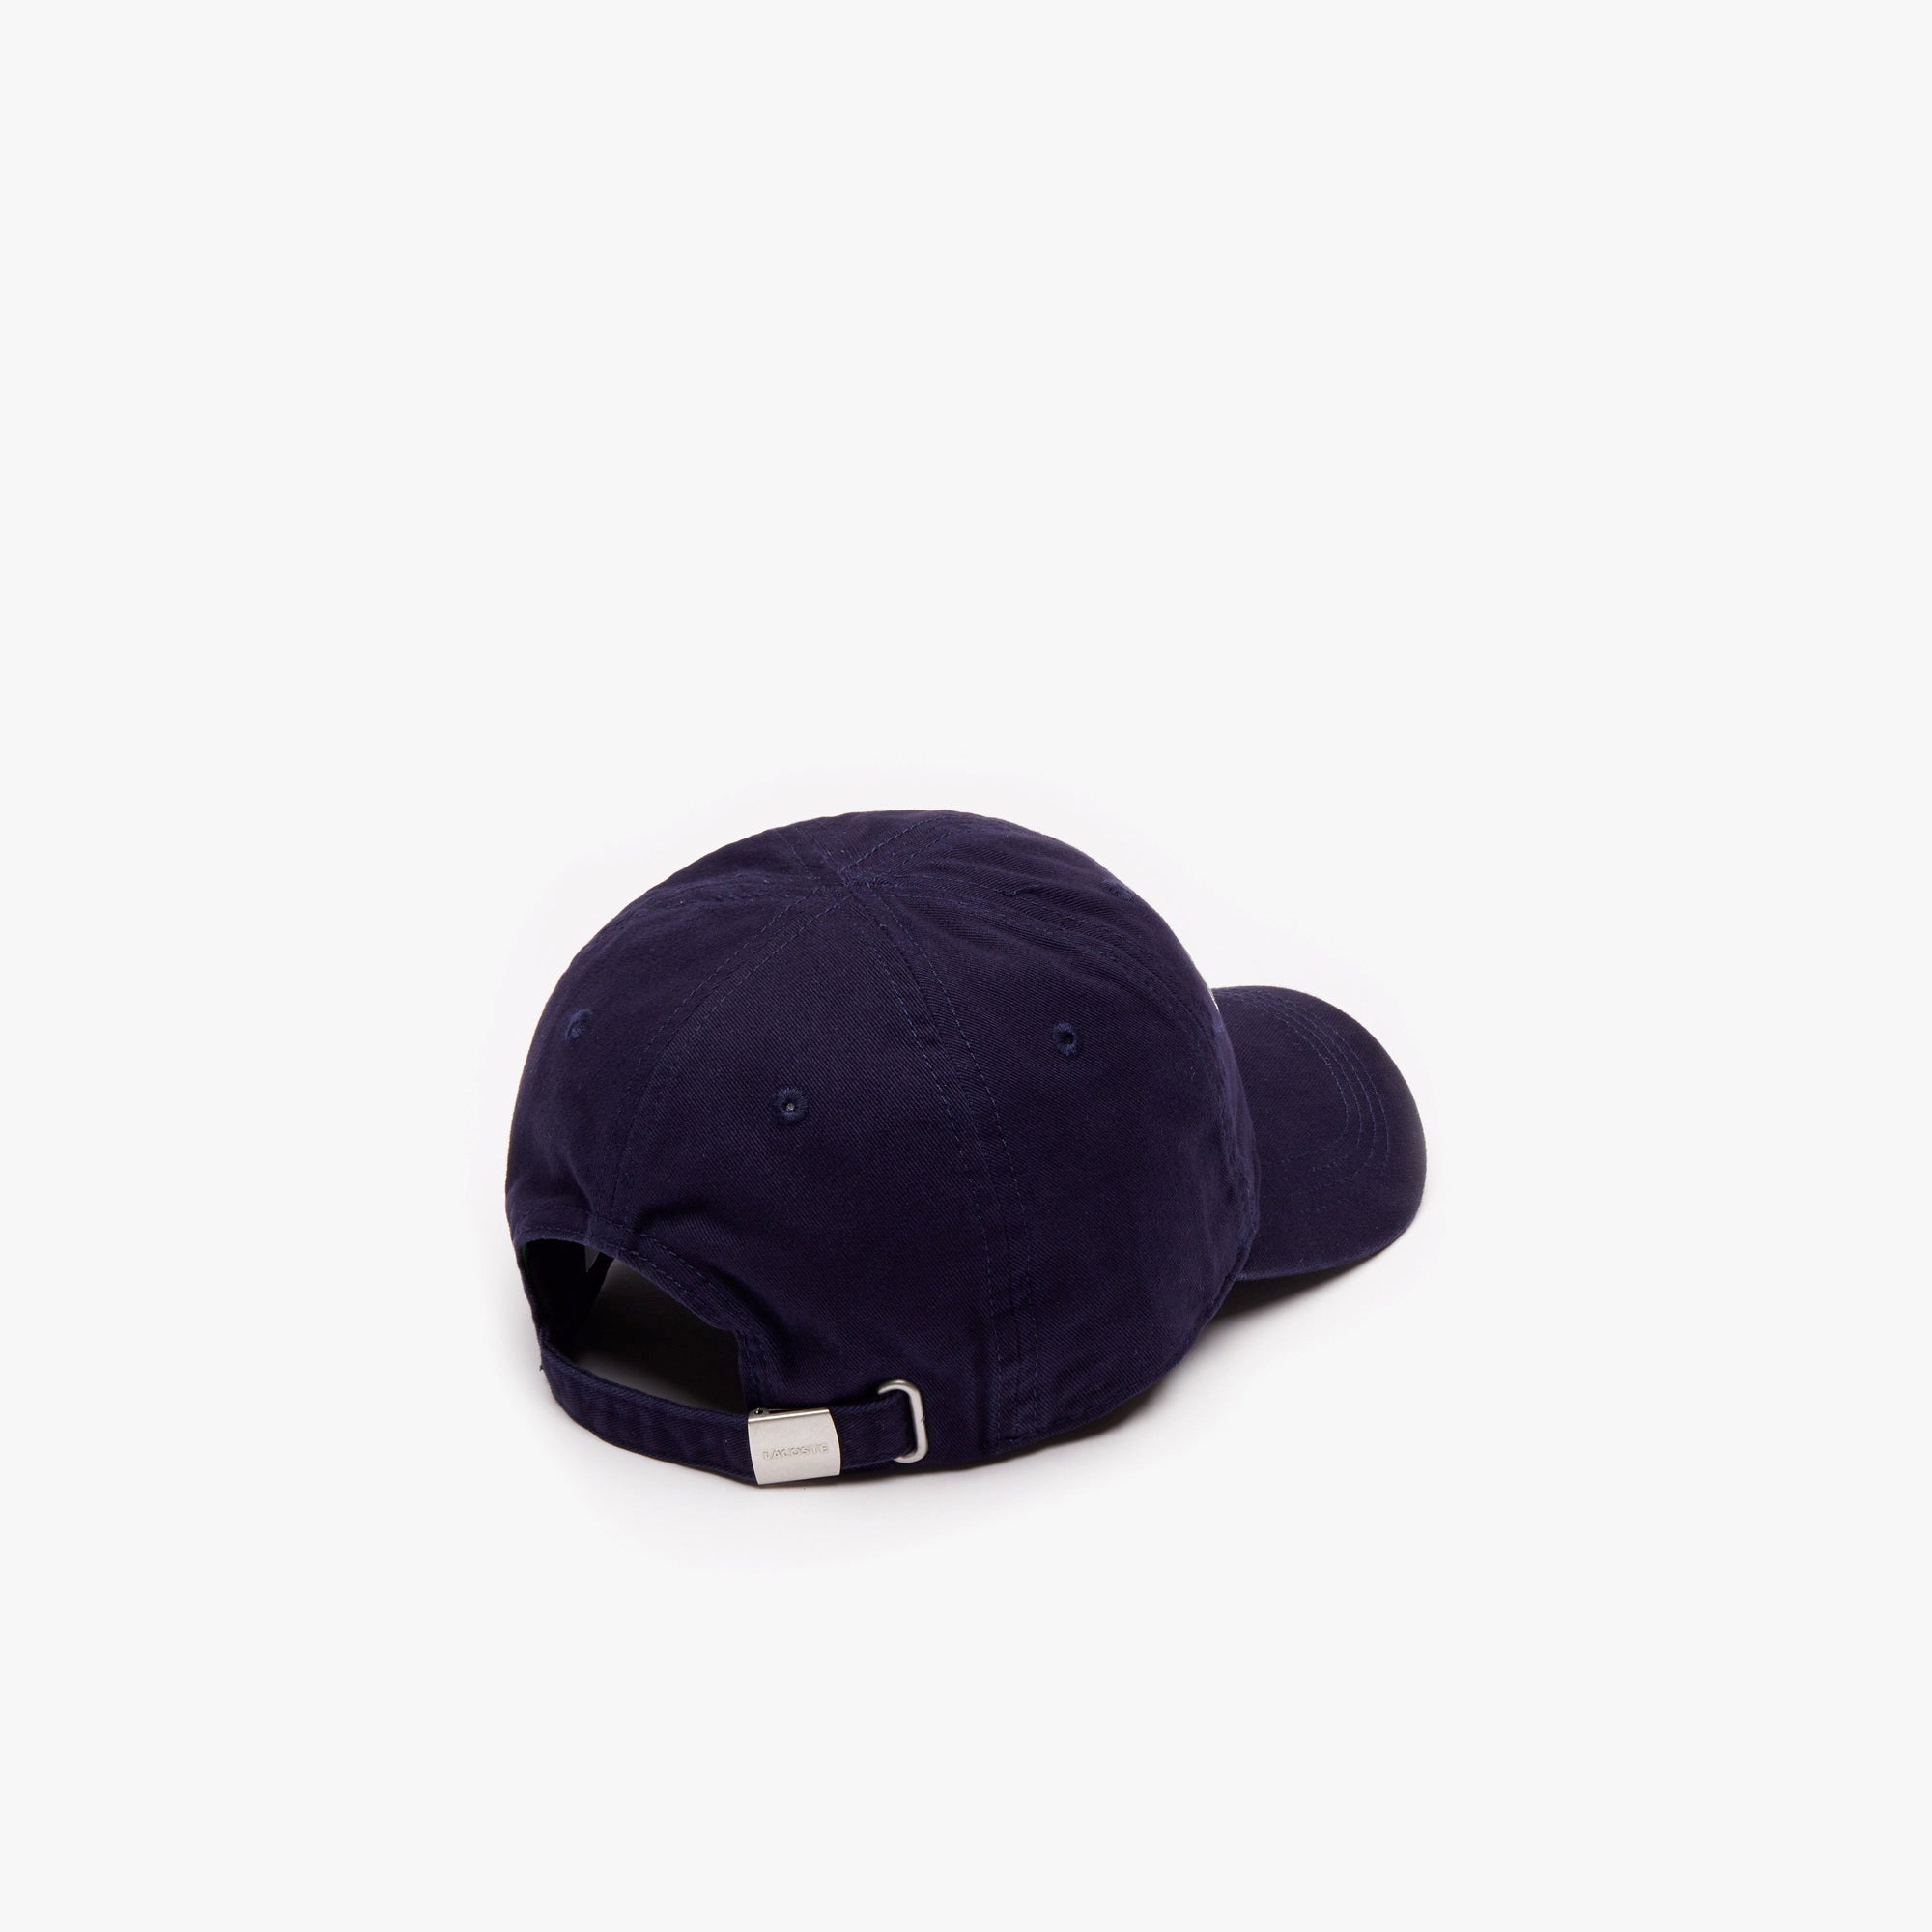 navy lacoste hat